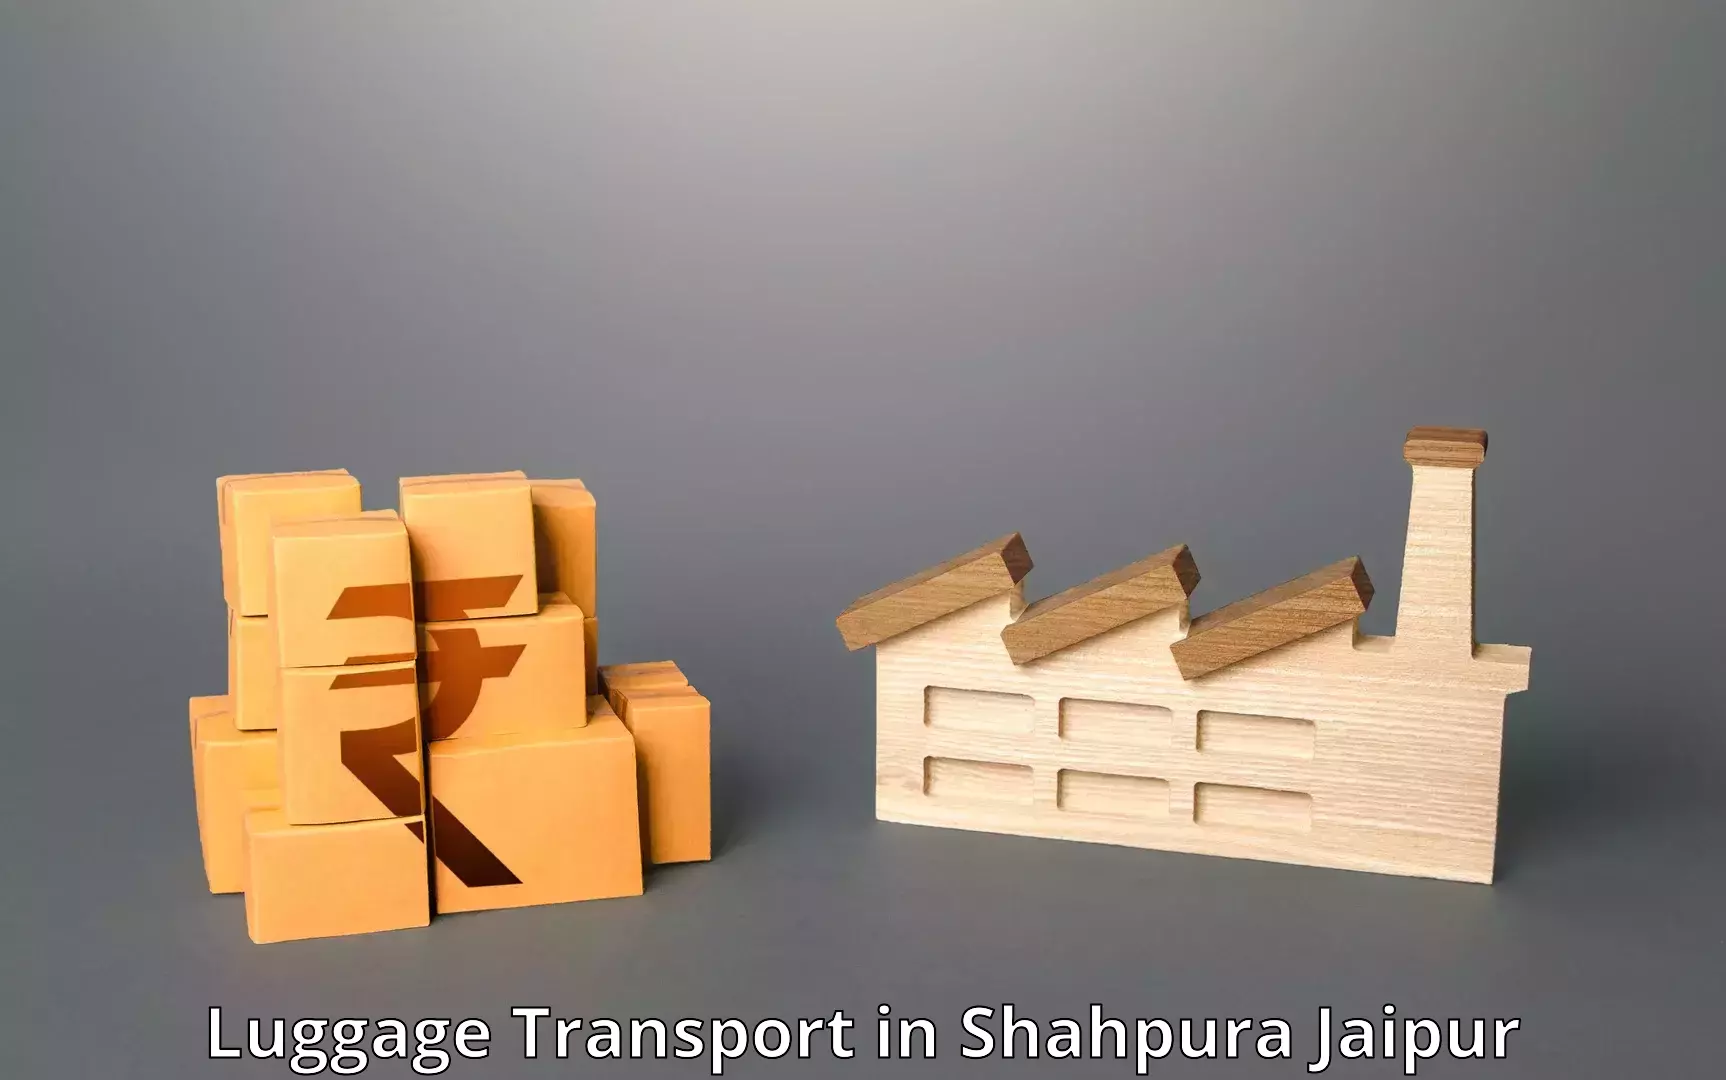 Luggage transport operations in Shahpura Jaipur